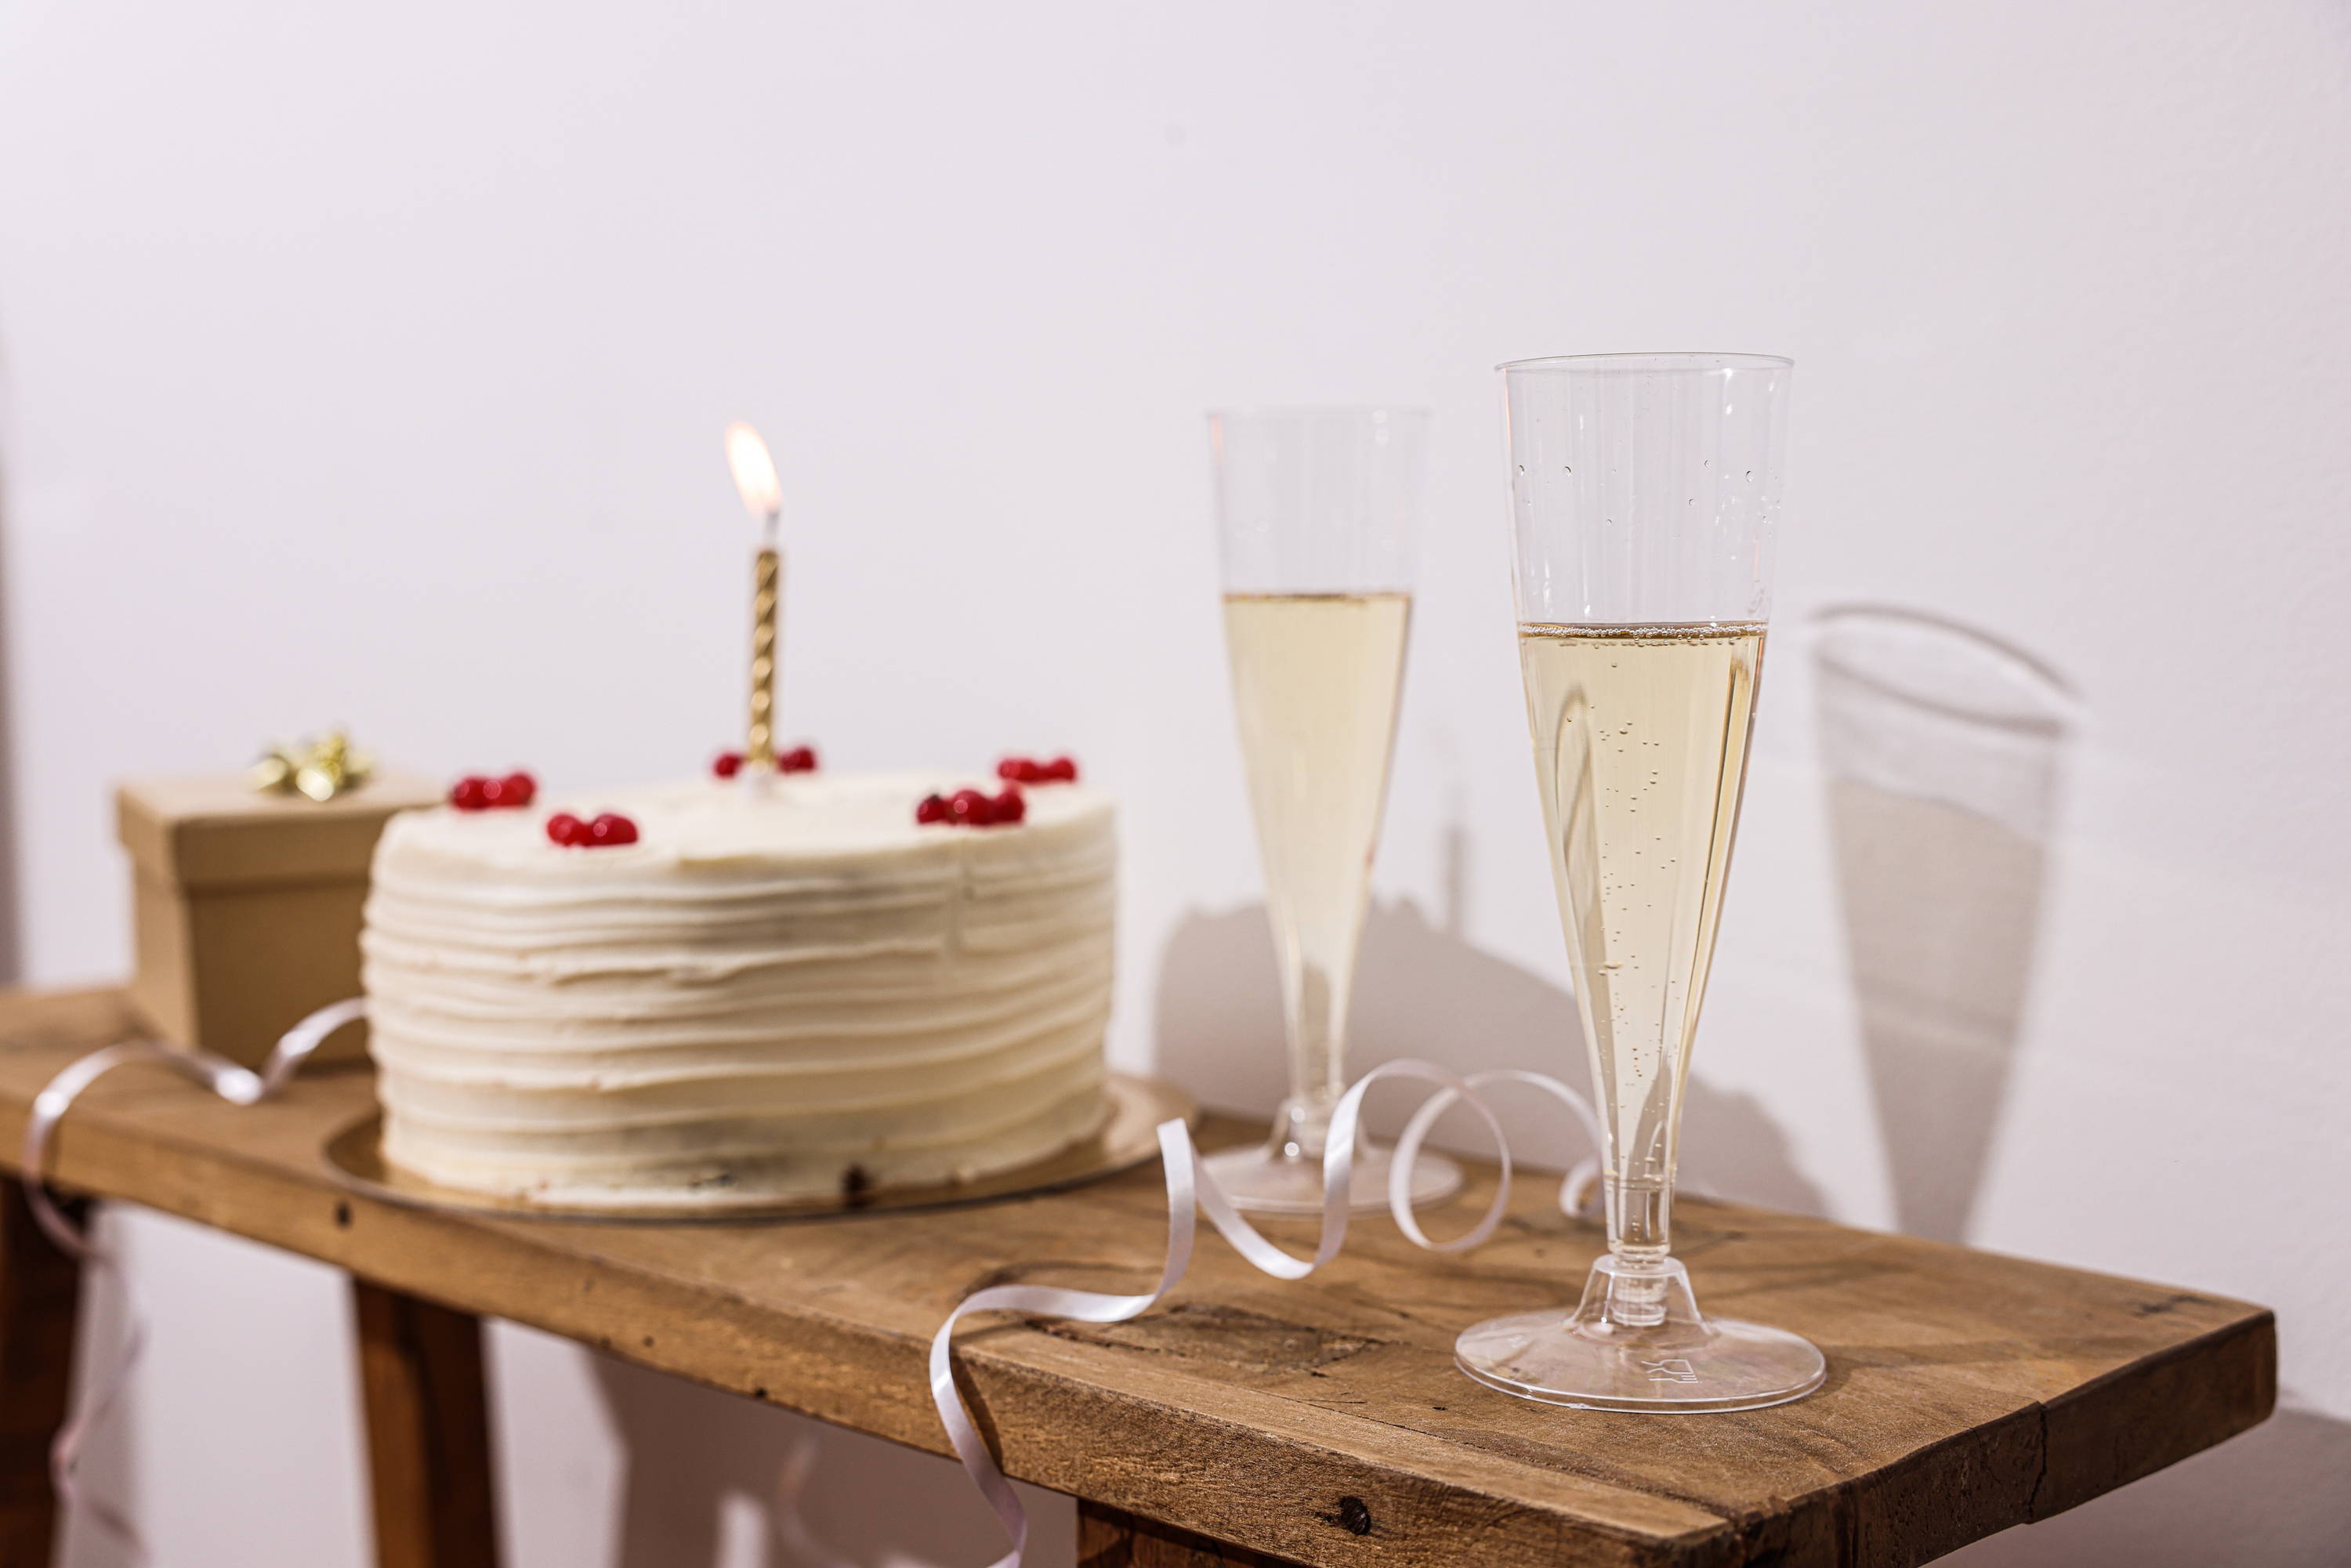 Sparkling wine alongside a birthday cake.  